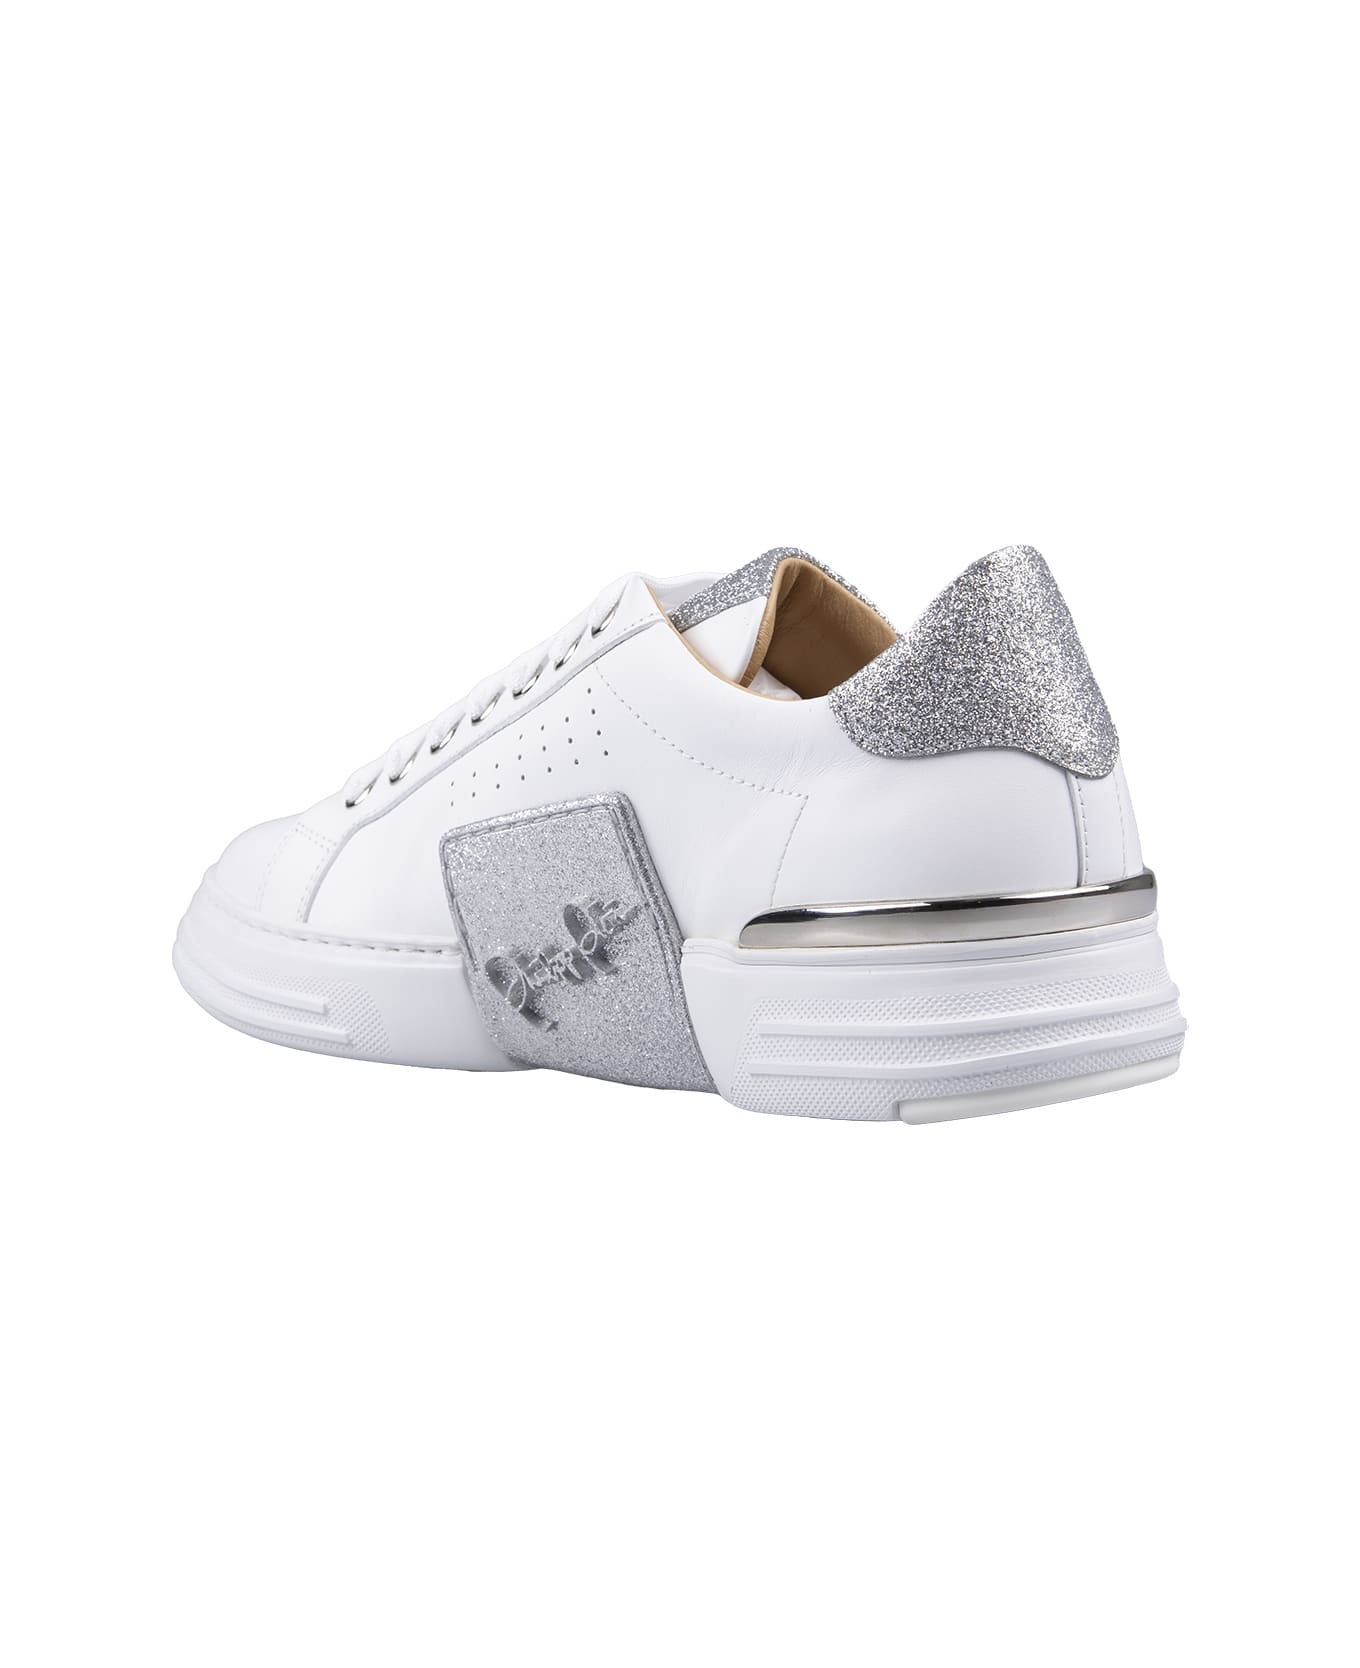 Philipp Plein White And Silver Phantom Kick$ Sneakers - Bianco